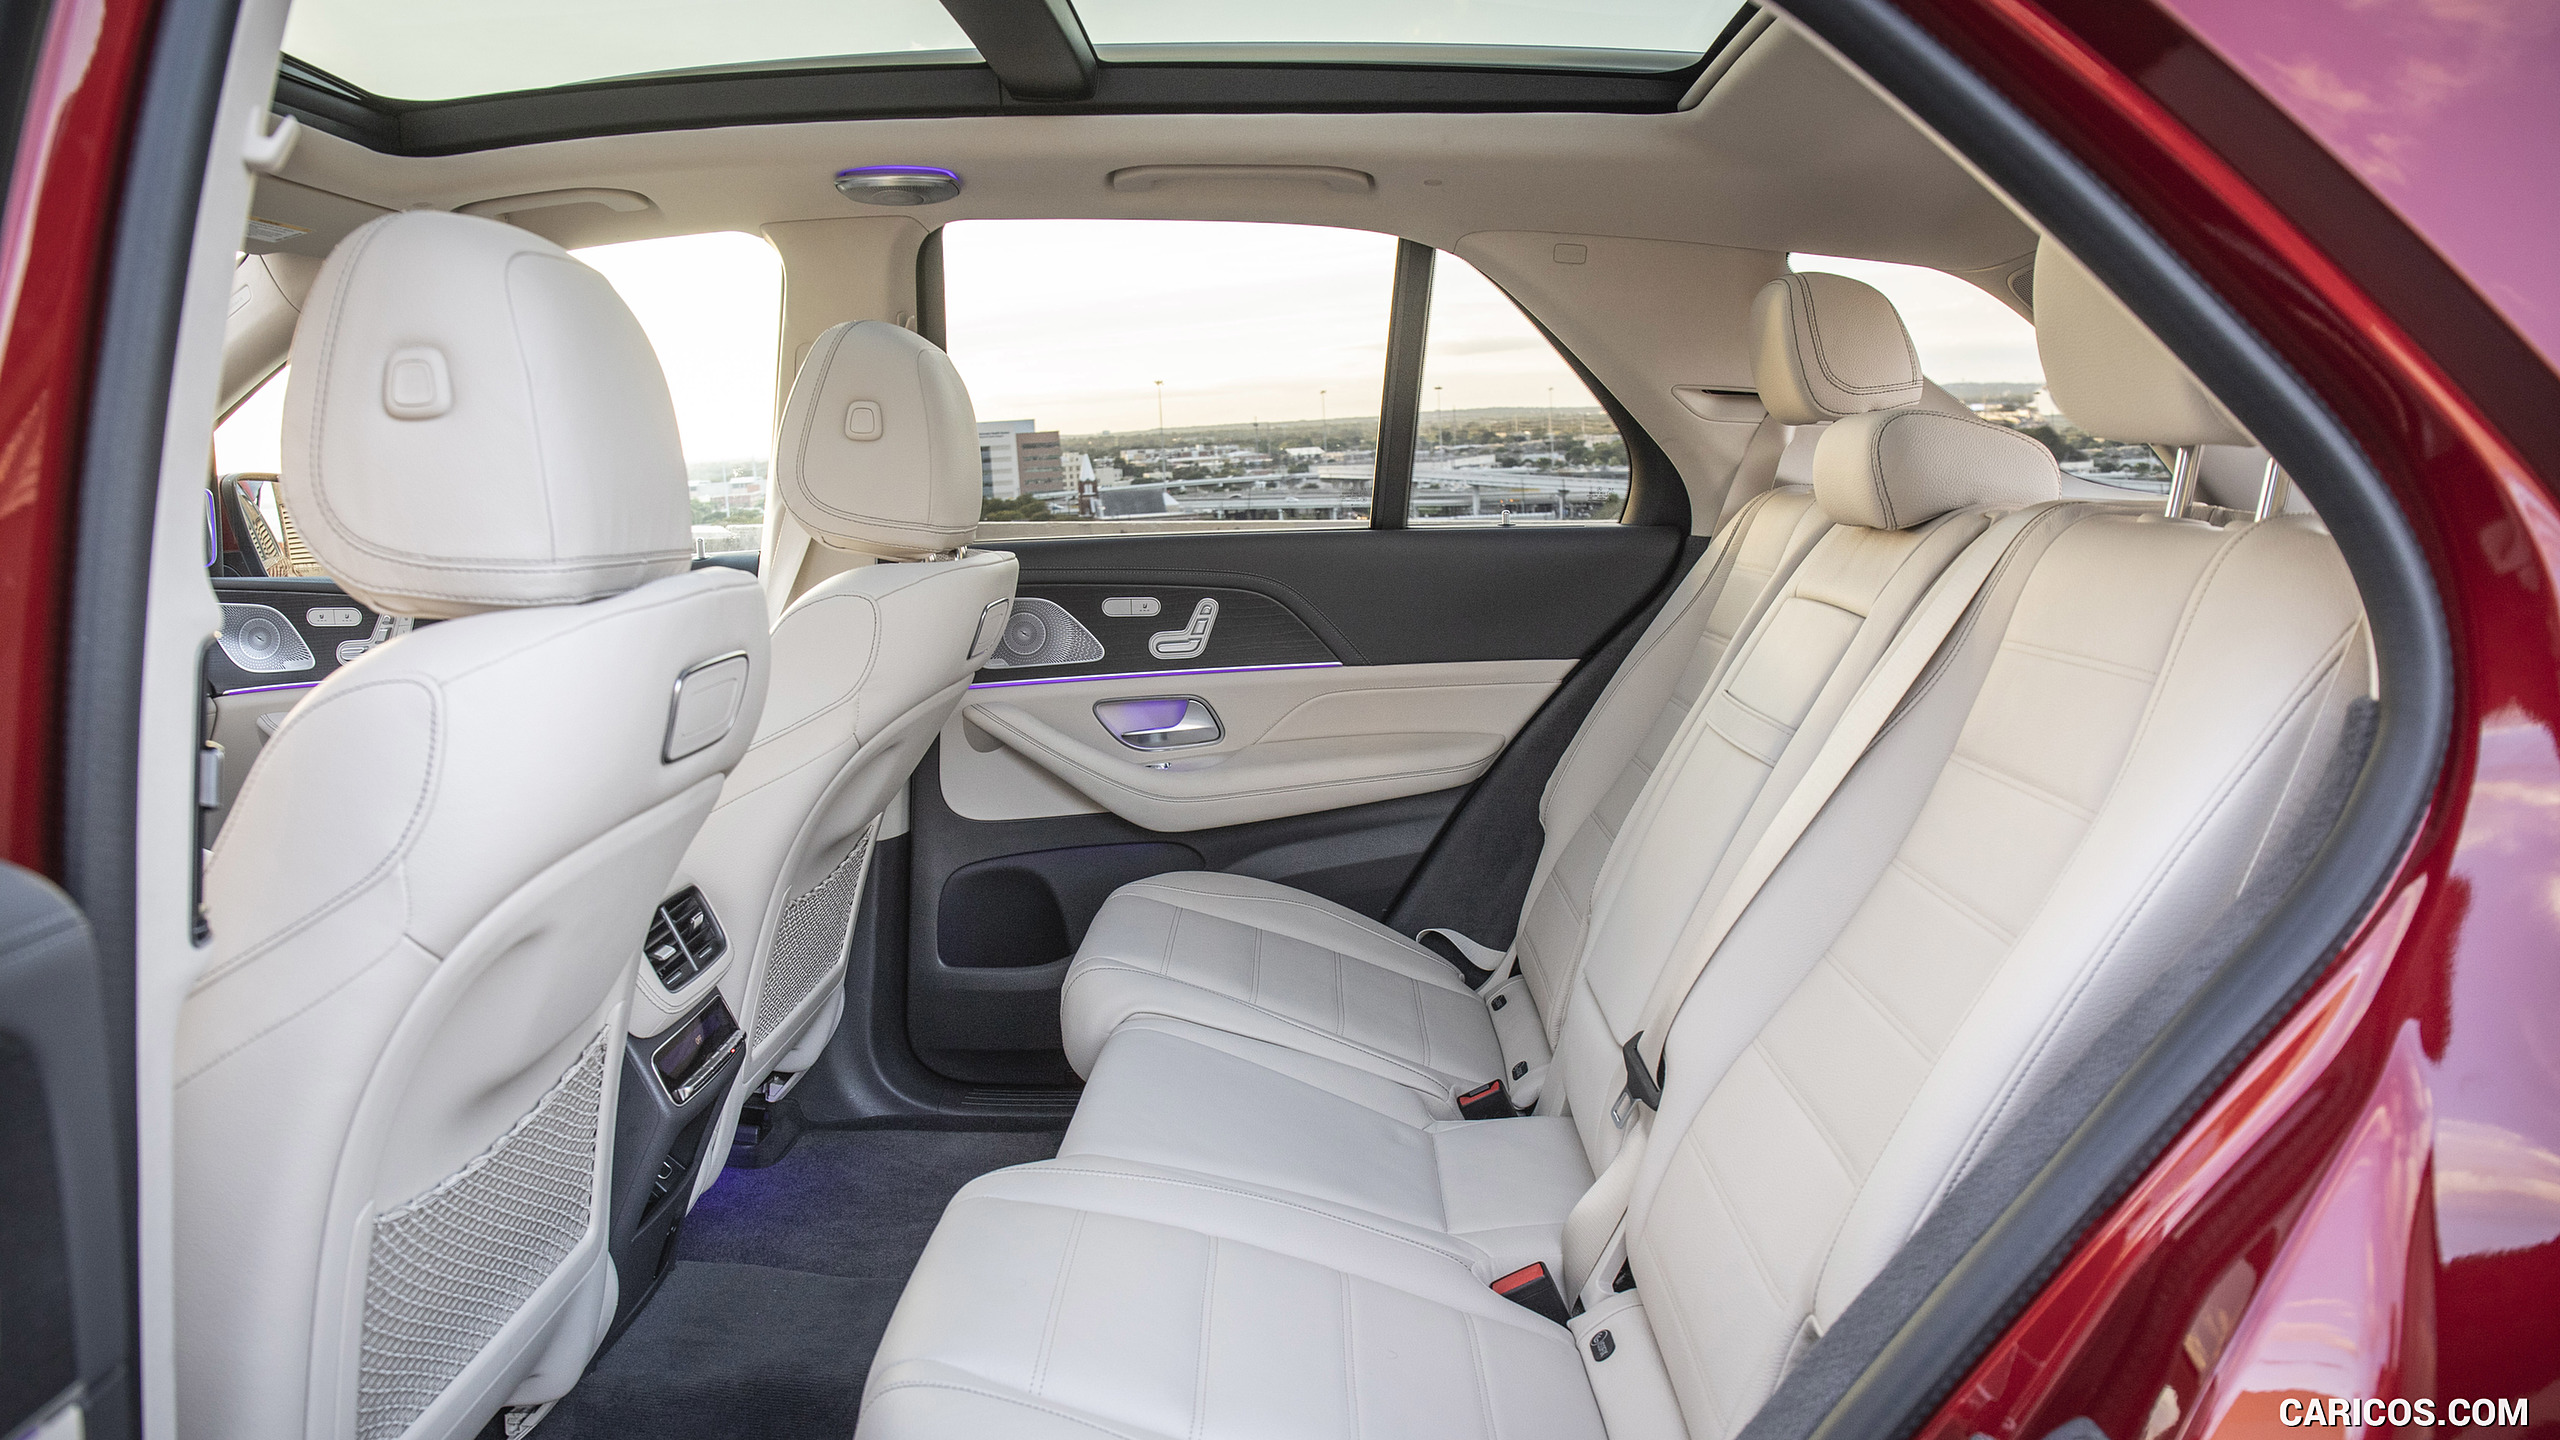 2020 Mercedes-Benz GLE 450 4MATIC (Color: Designo Hyazinth Red Metallic; US-Spec) - Interior, Rear Seats, #353 of 358